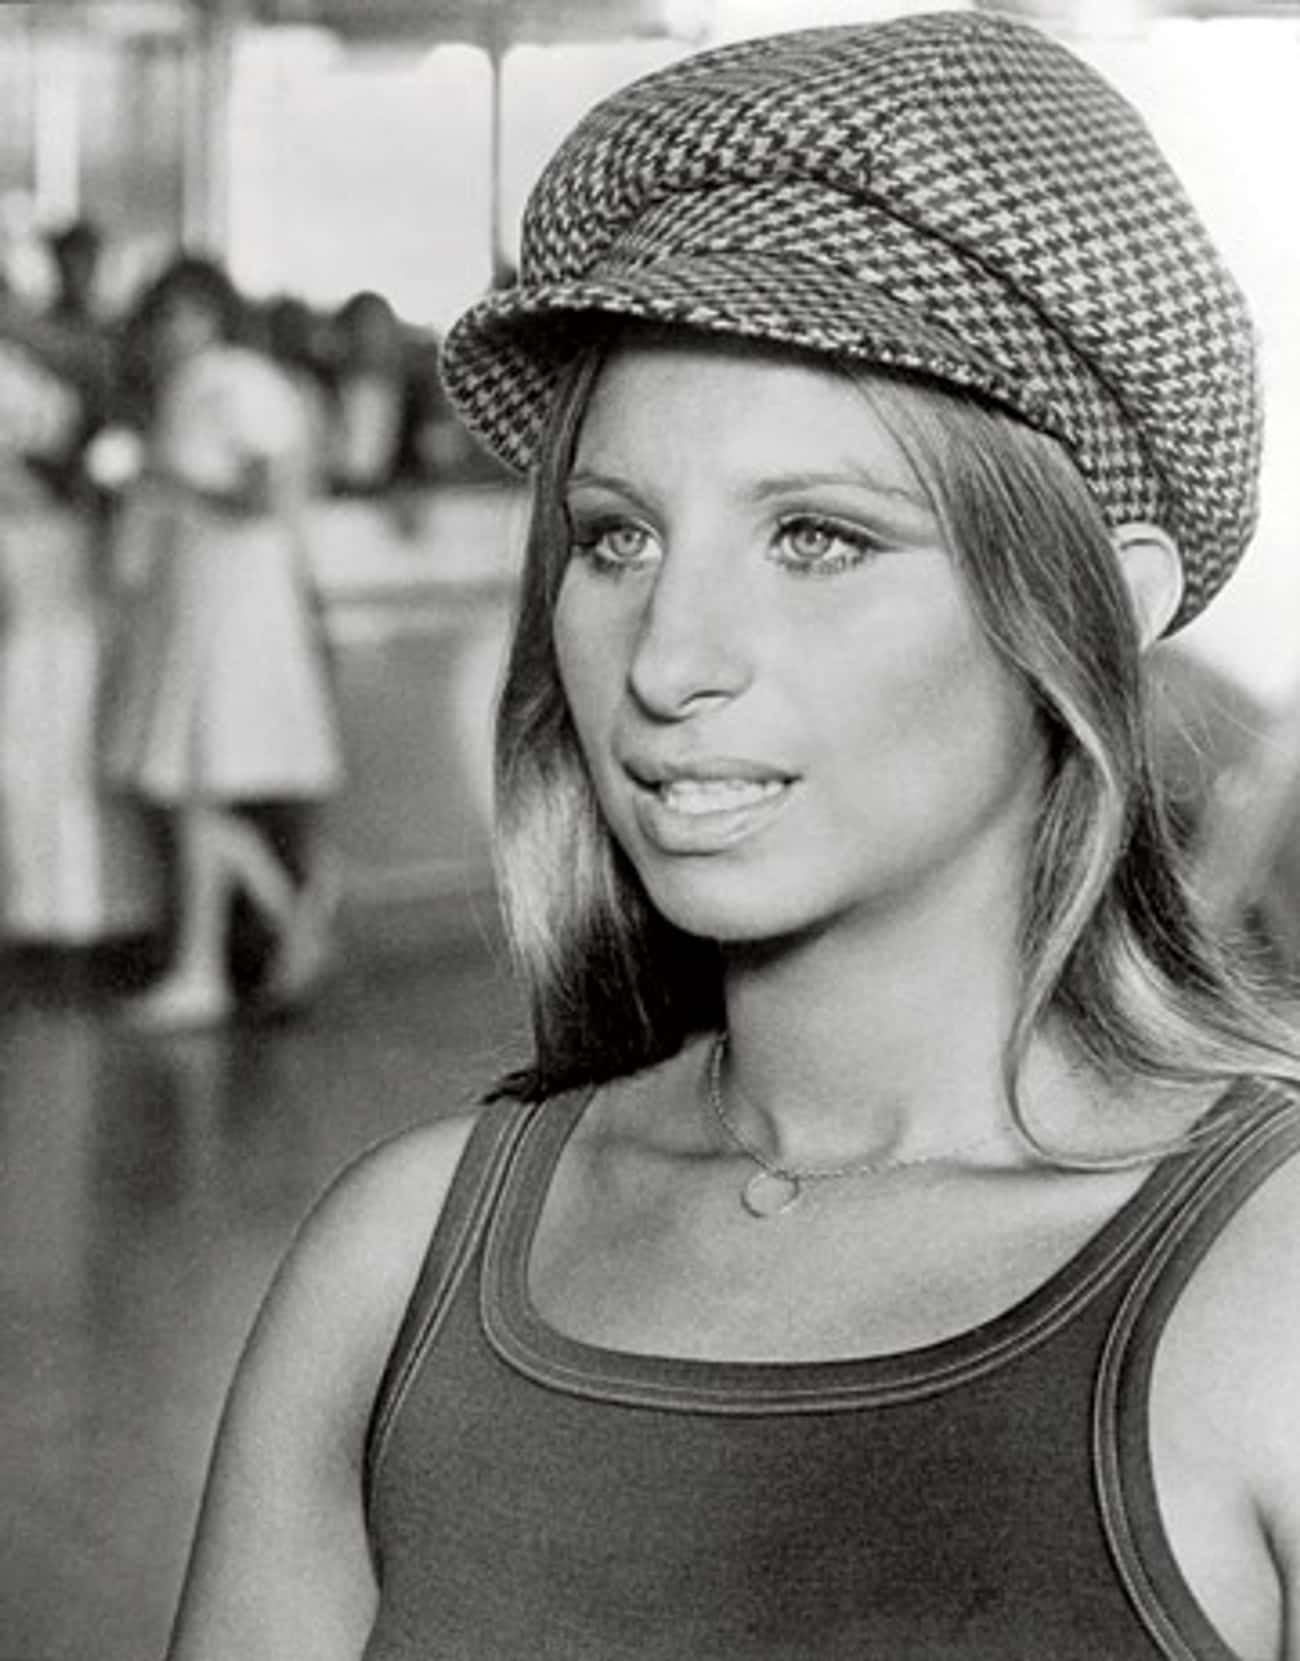 Young Barbra Streisand With Checkered Messenger Hat Photo U1?auto=format&q=60&fit=crop&fm=pjpg&dpr=2&w=650